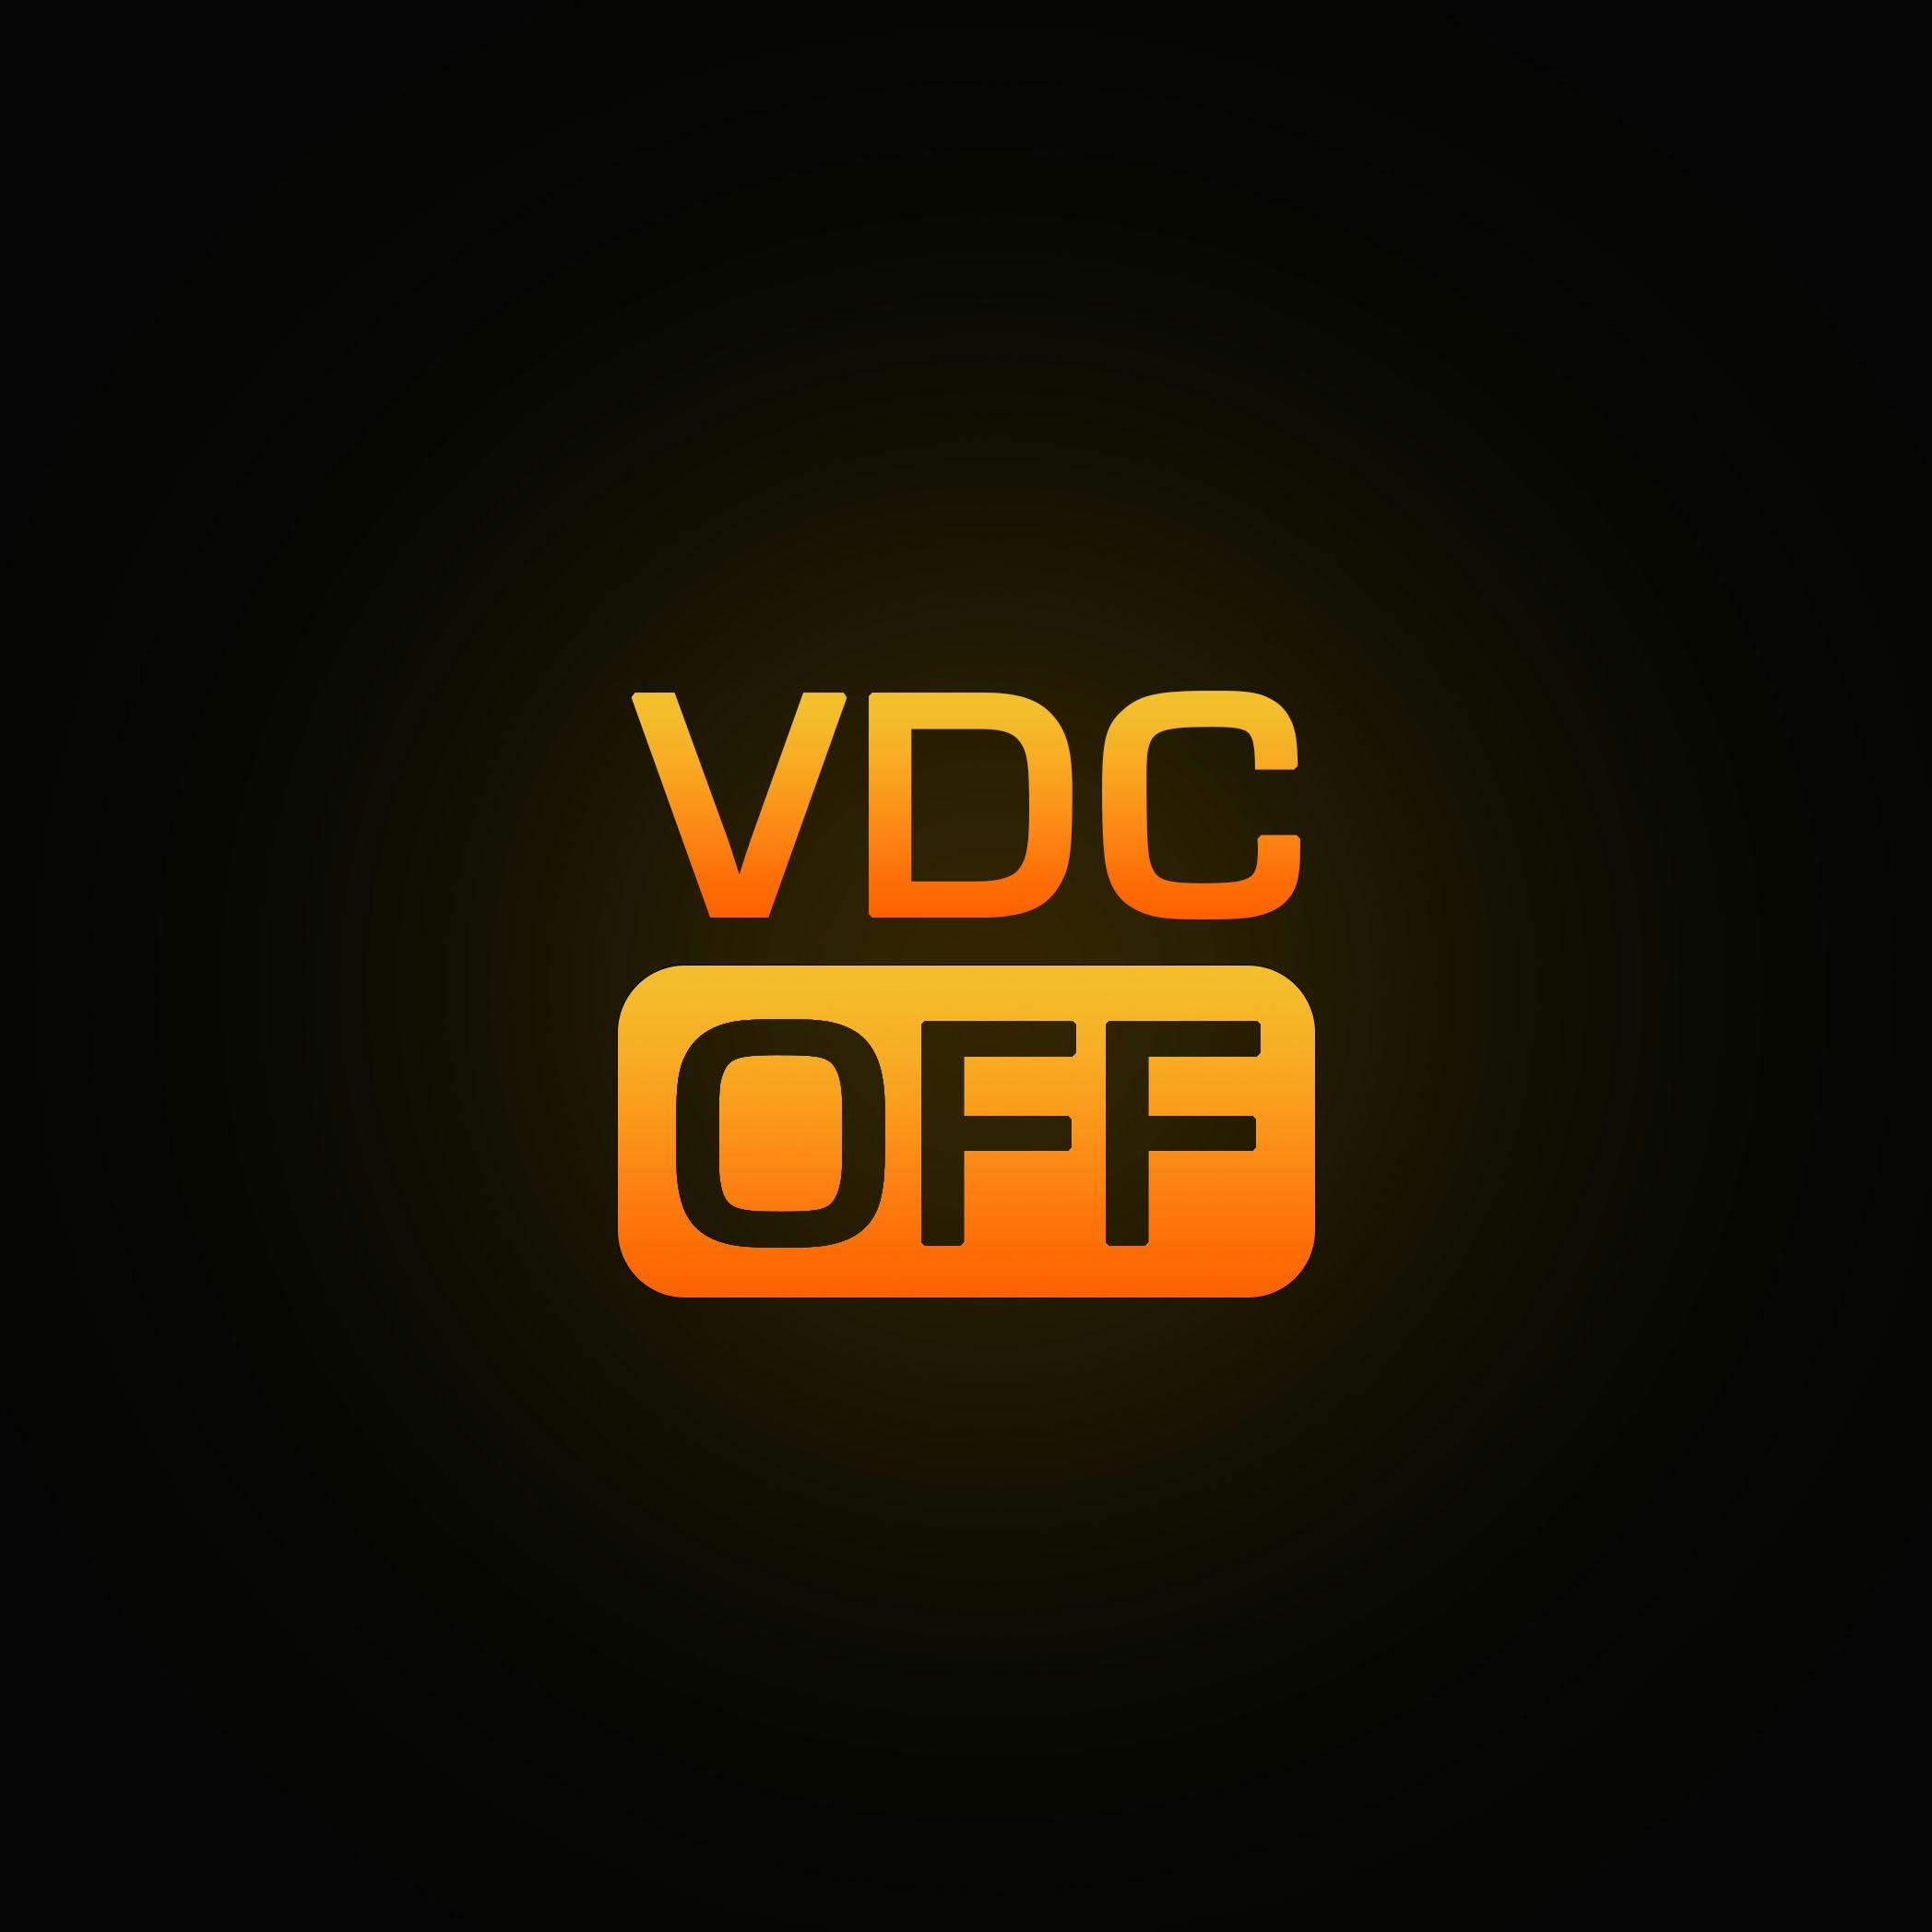 VDC OFF warning light